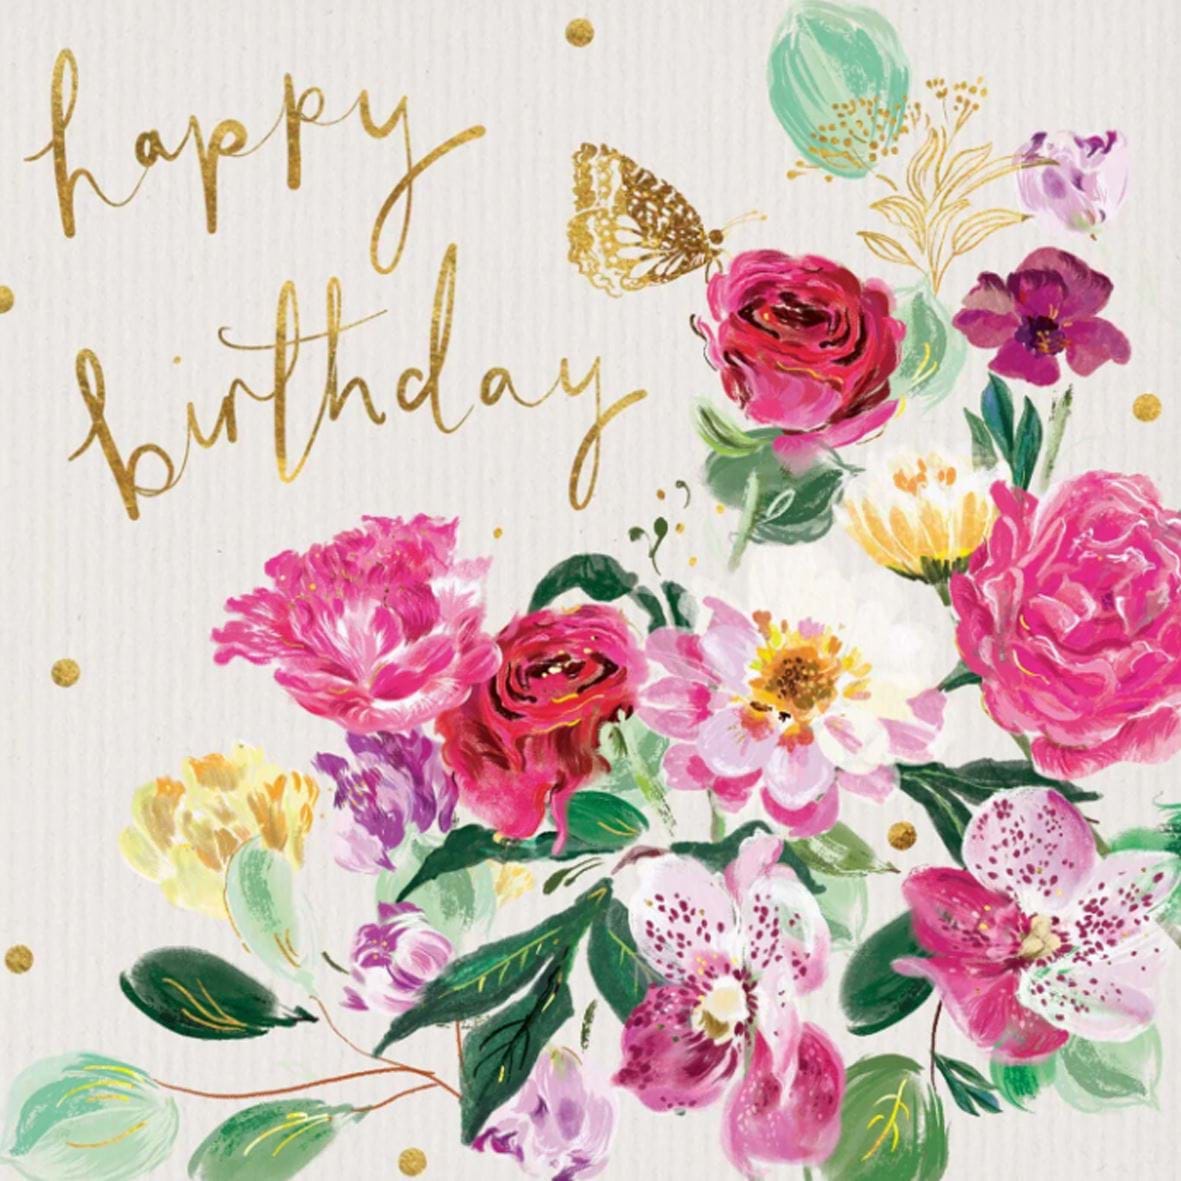 Floral Bloom Birthday Card